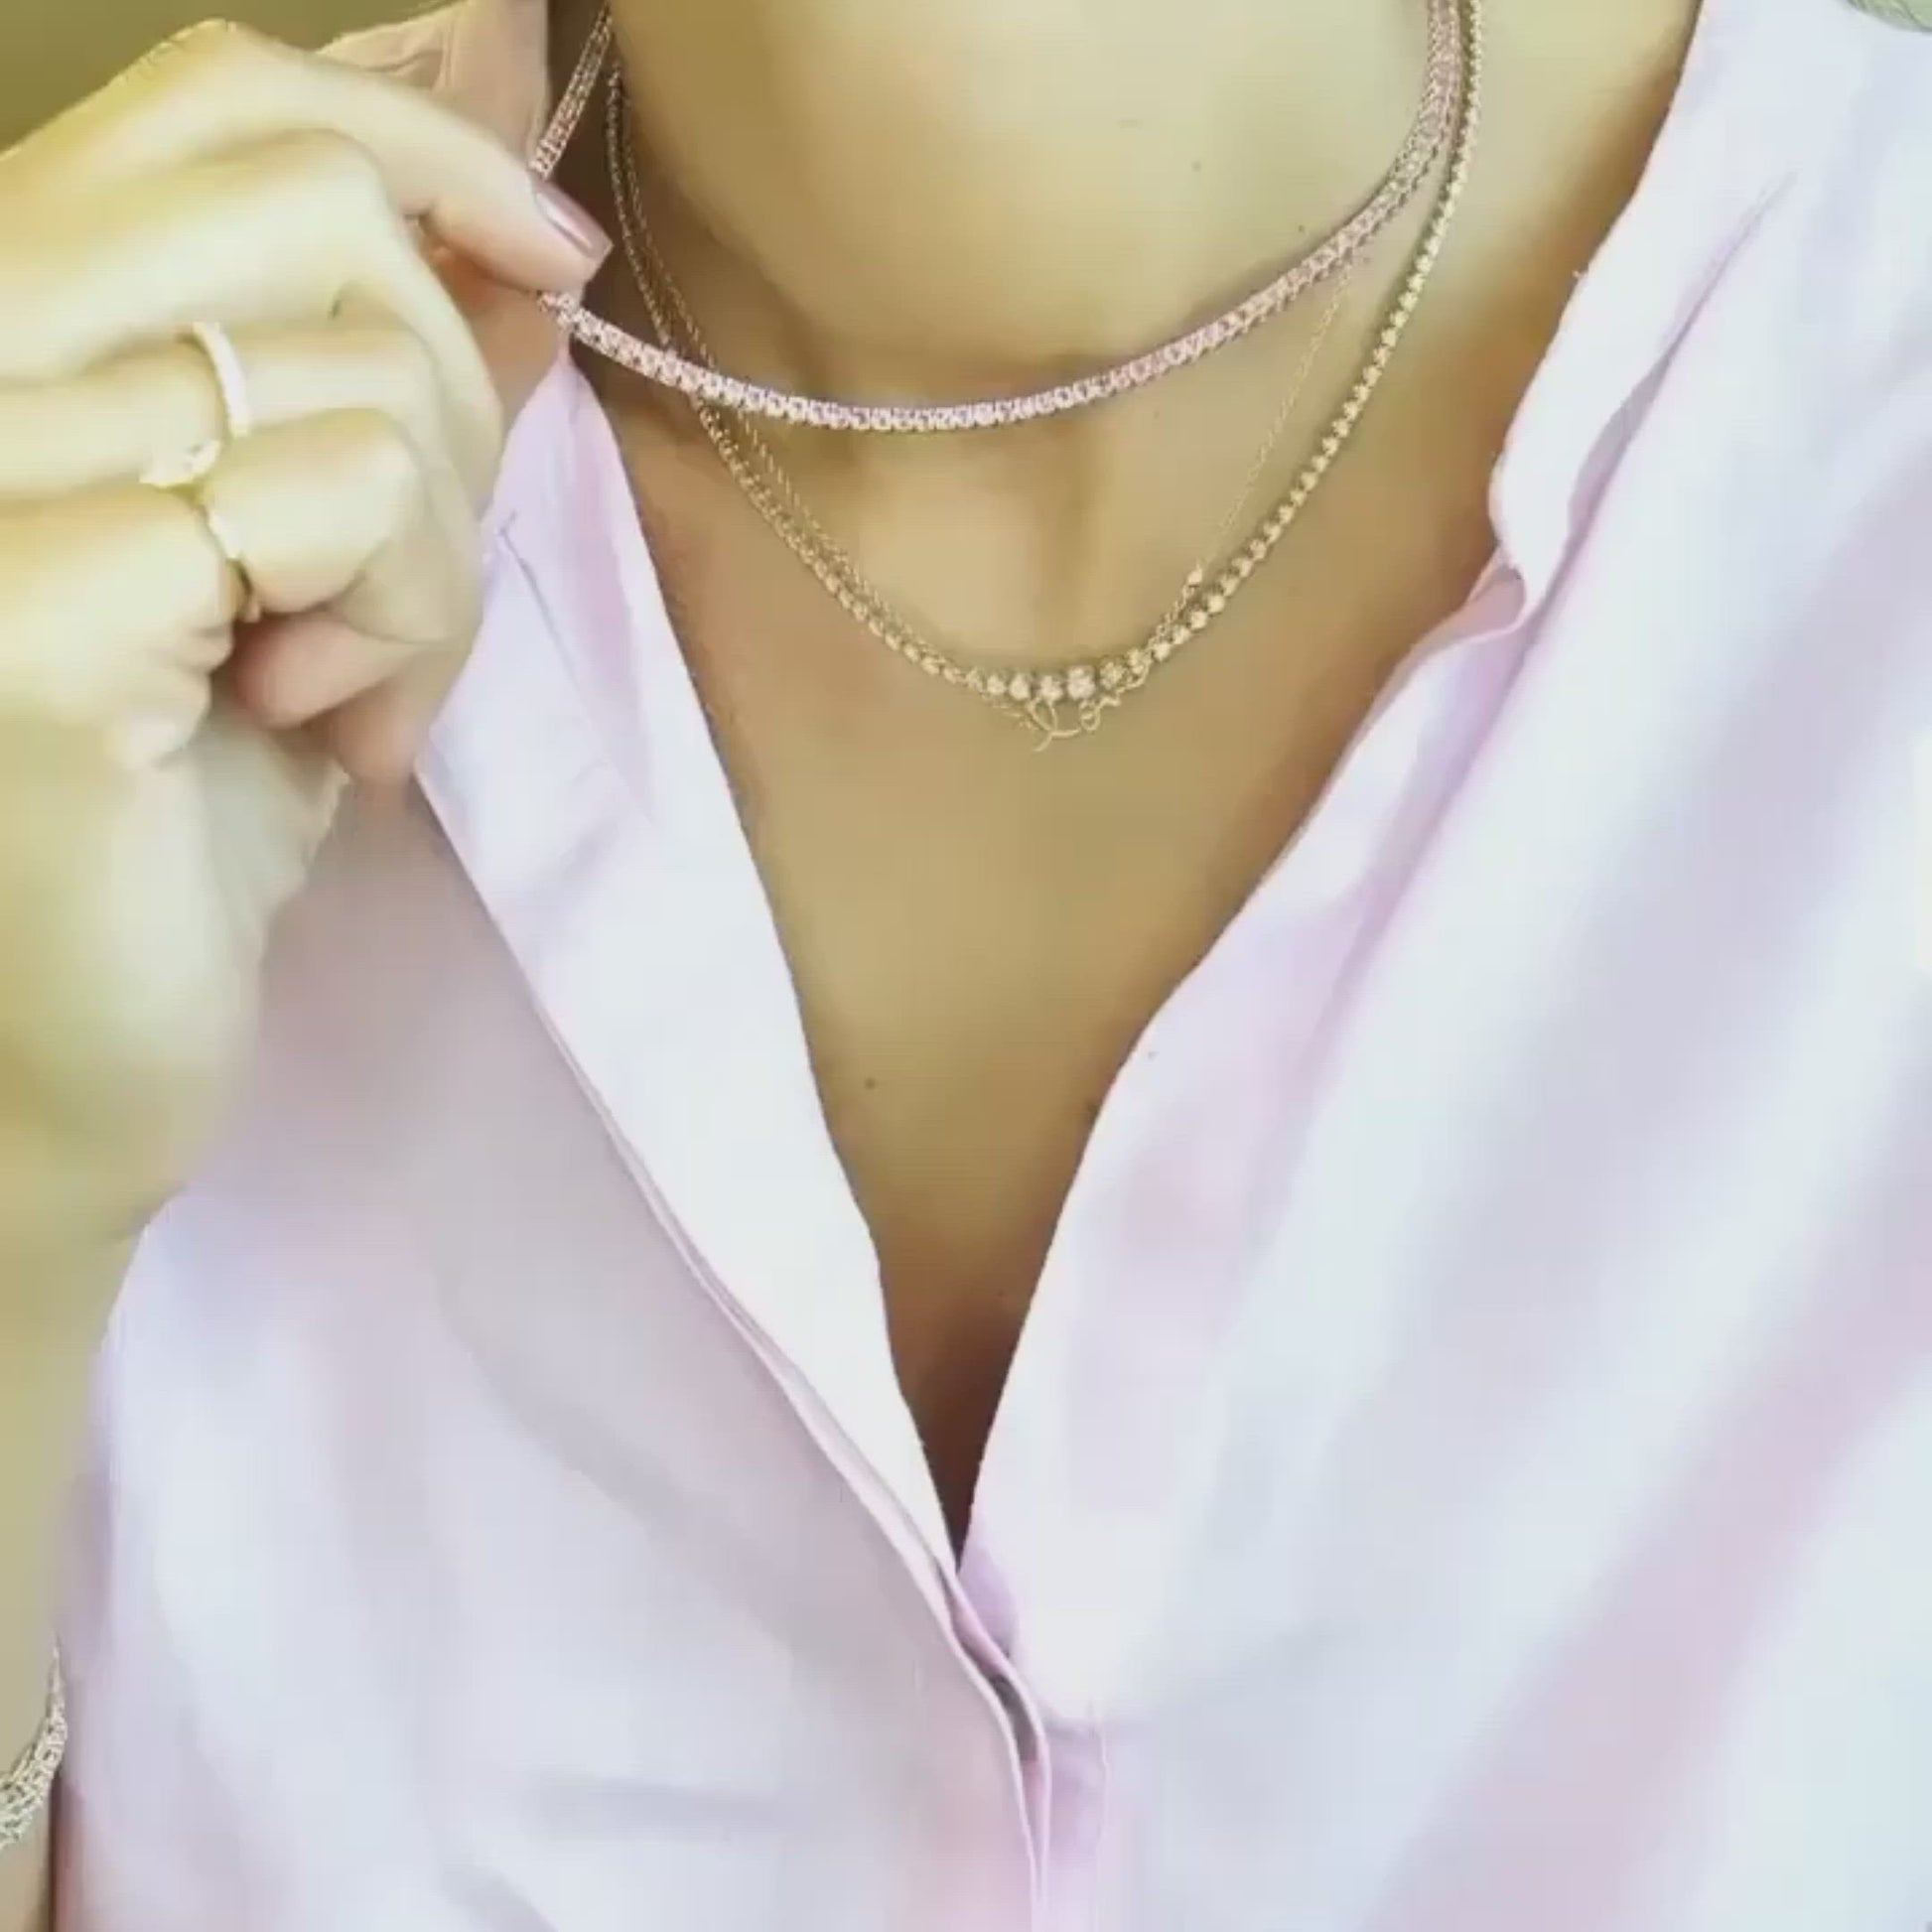 Pink Sapphire Tennis Necklace - Razny Jewelers